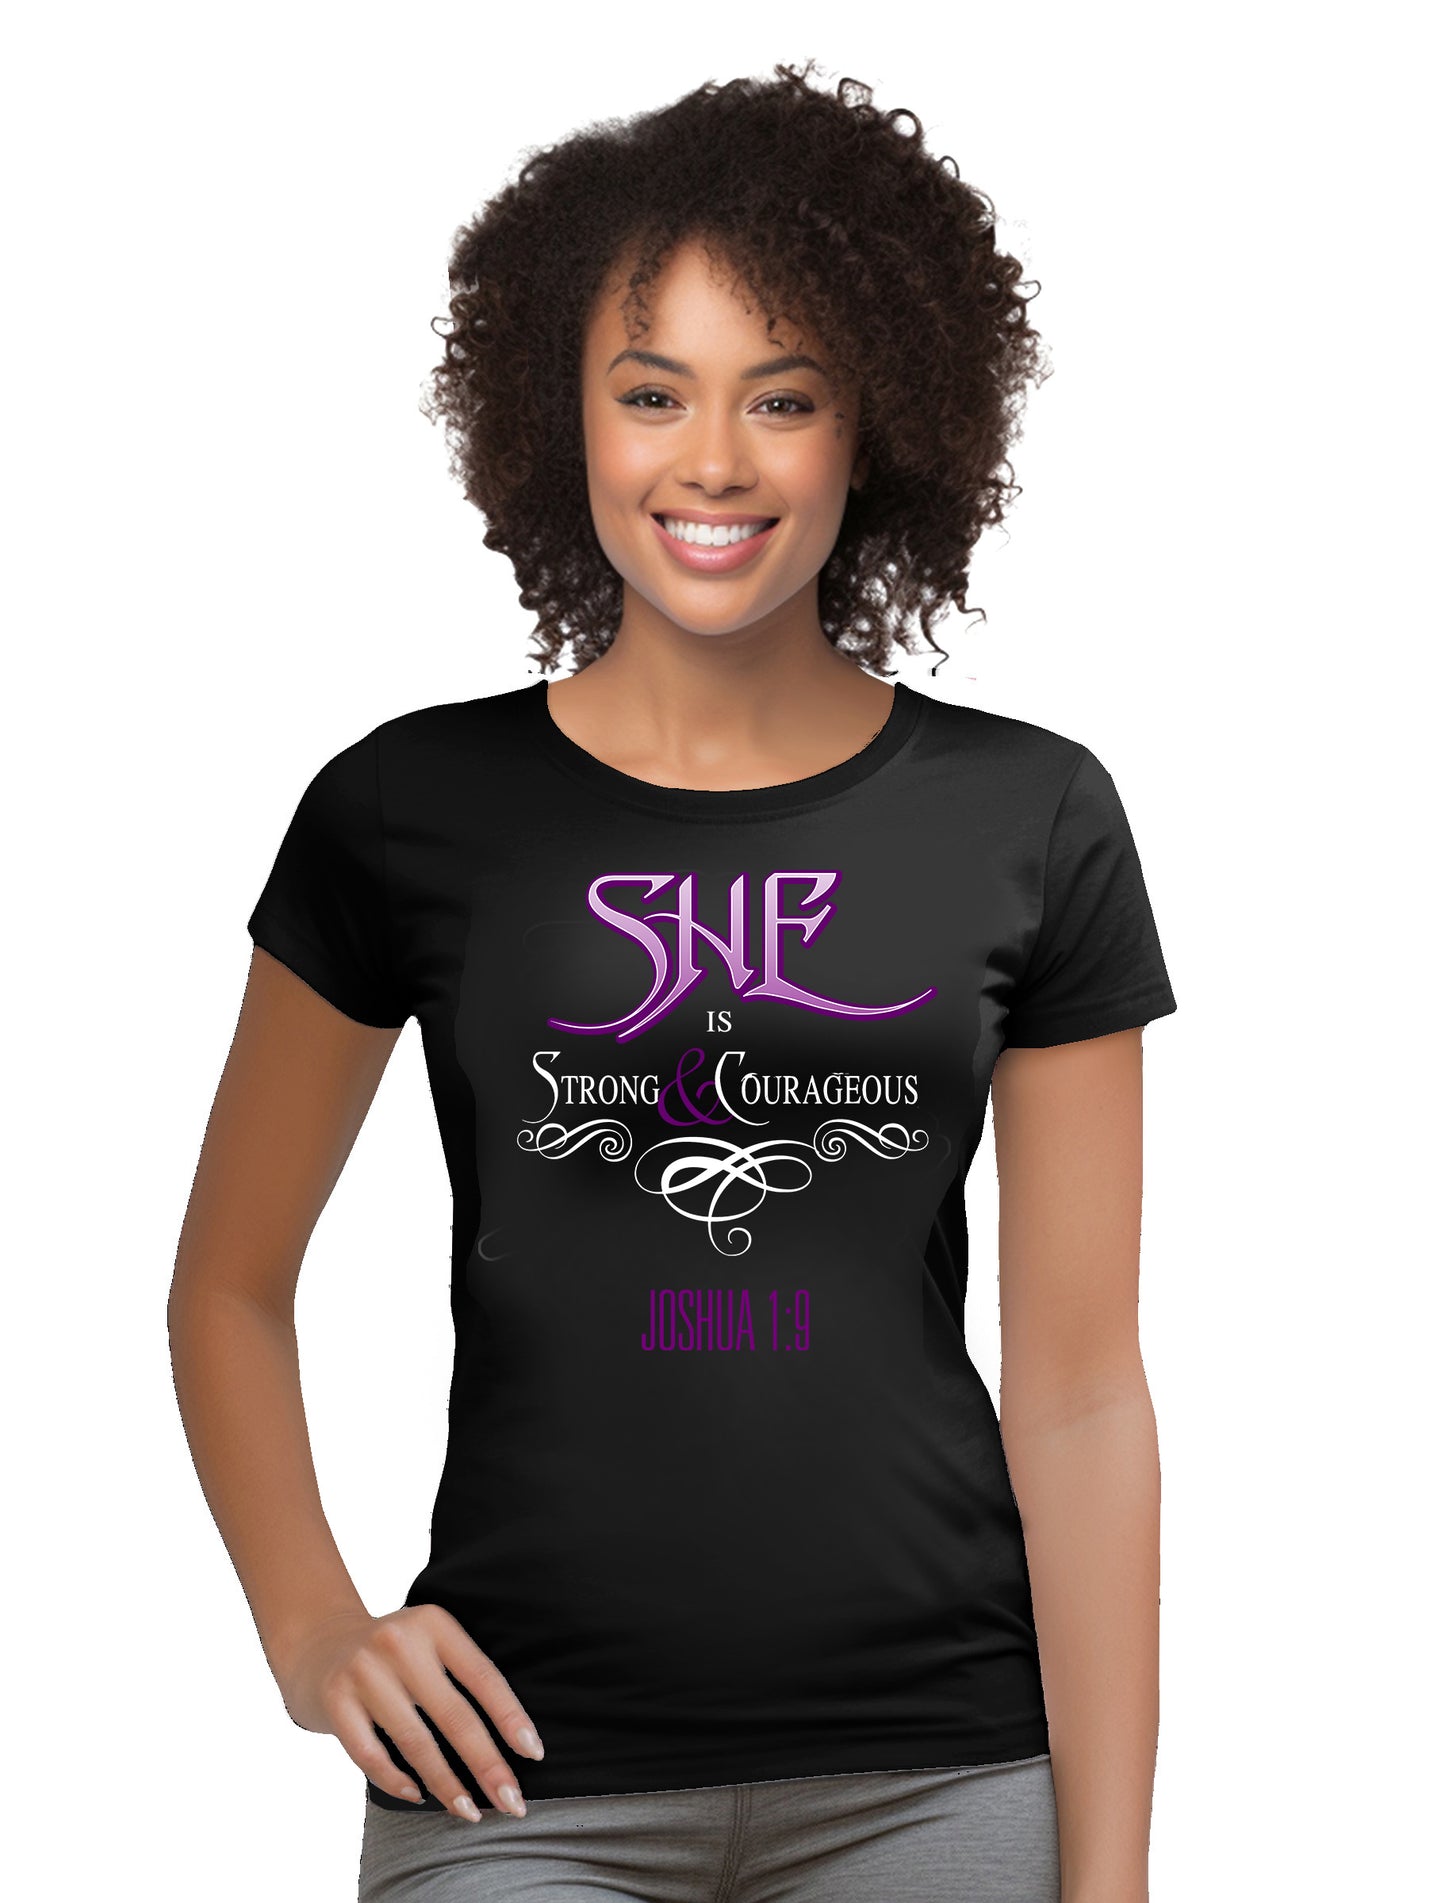 SHE JOSHUA 1-9 - Women's short sleeve fitted tee